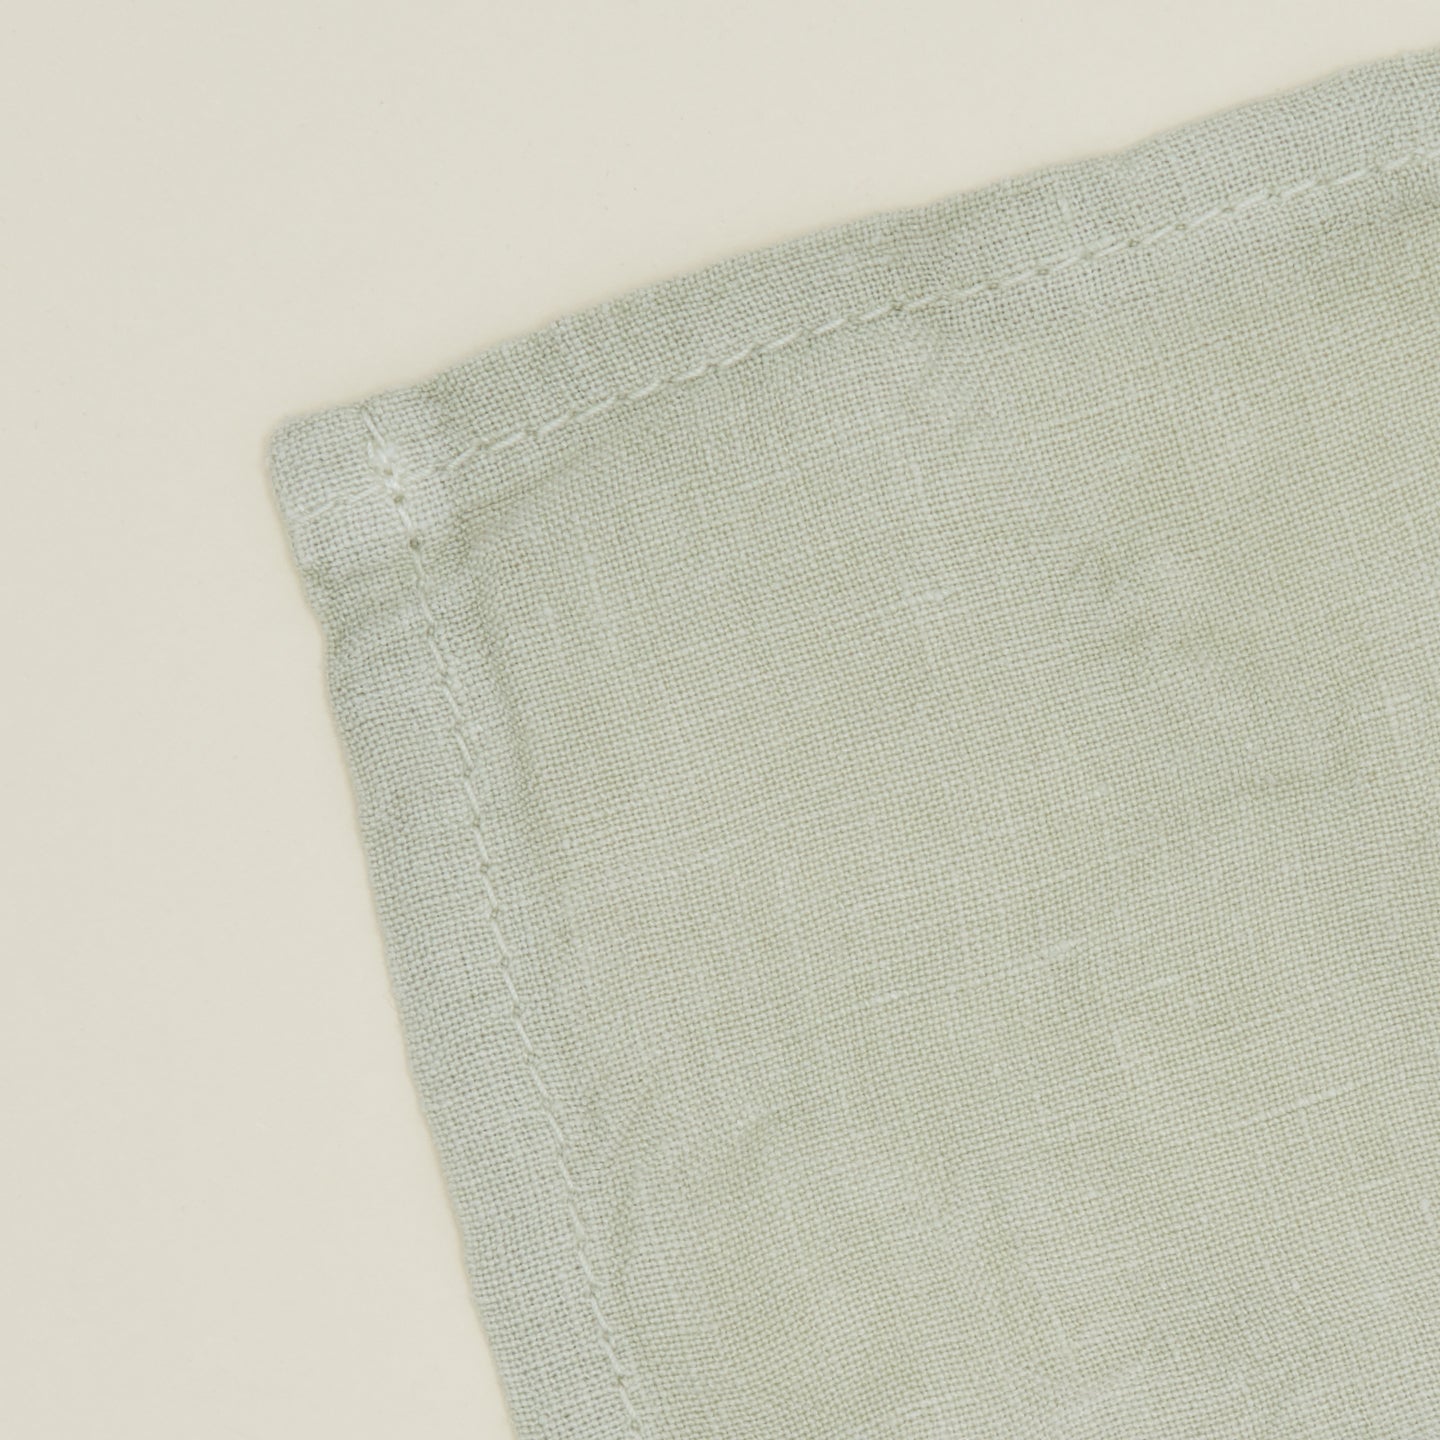 Hawkins New York Simple Stonewashed Linen Napkins, Set of 4 - White